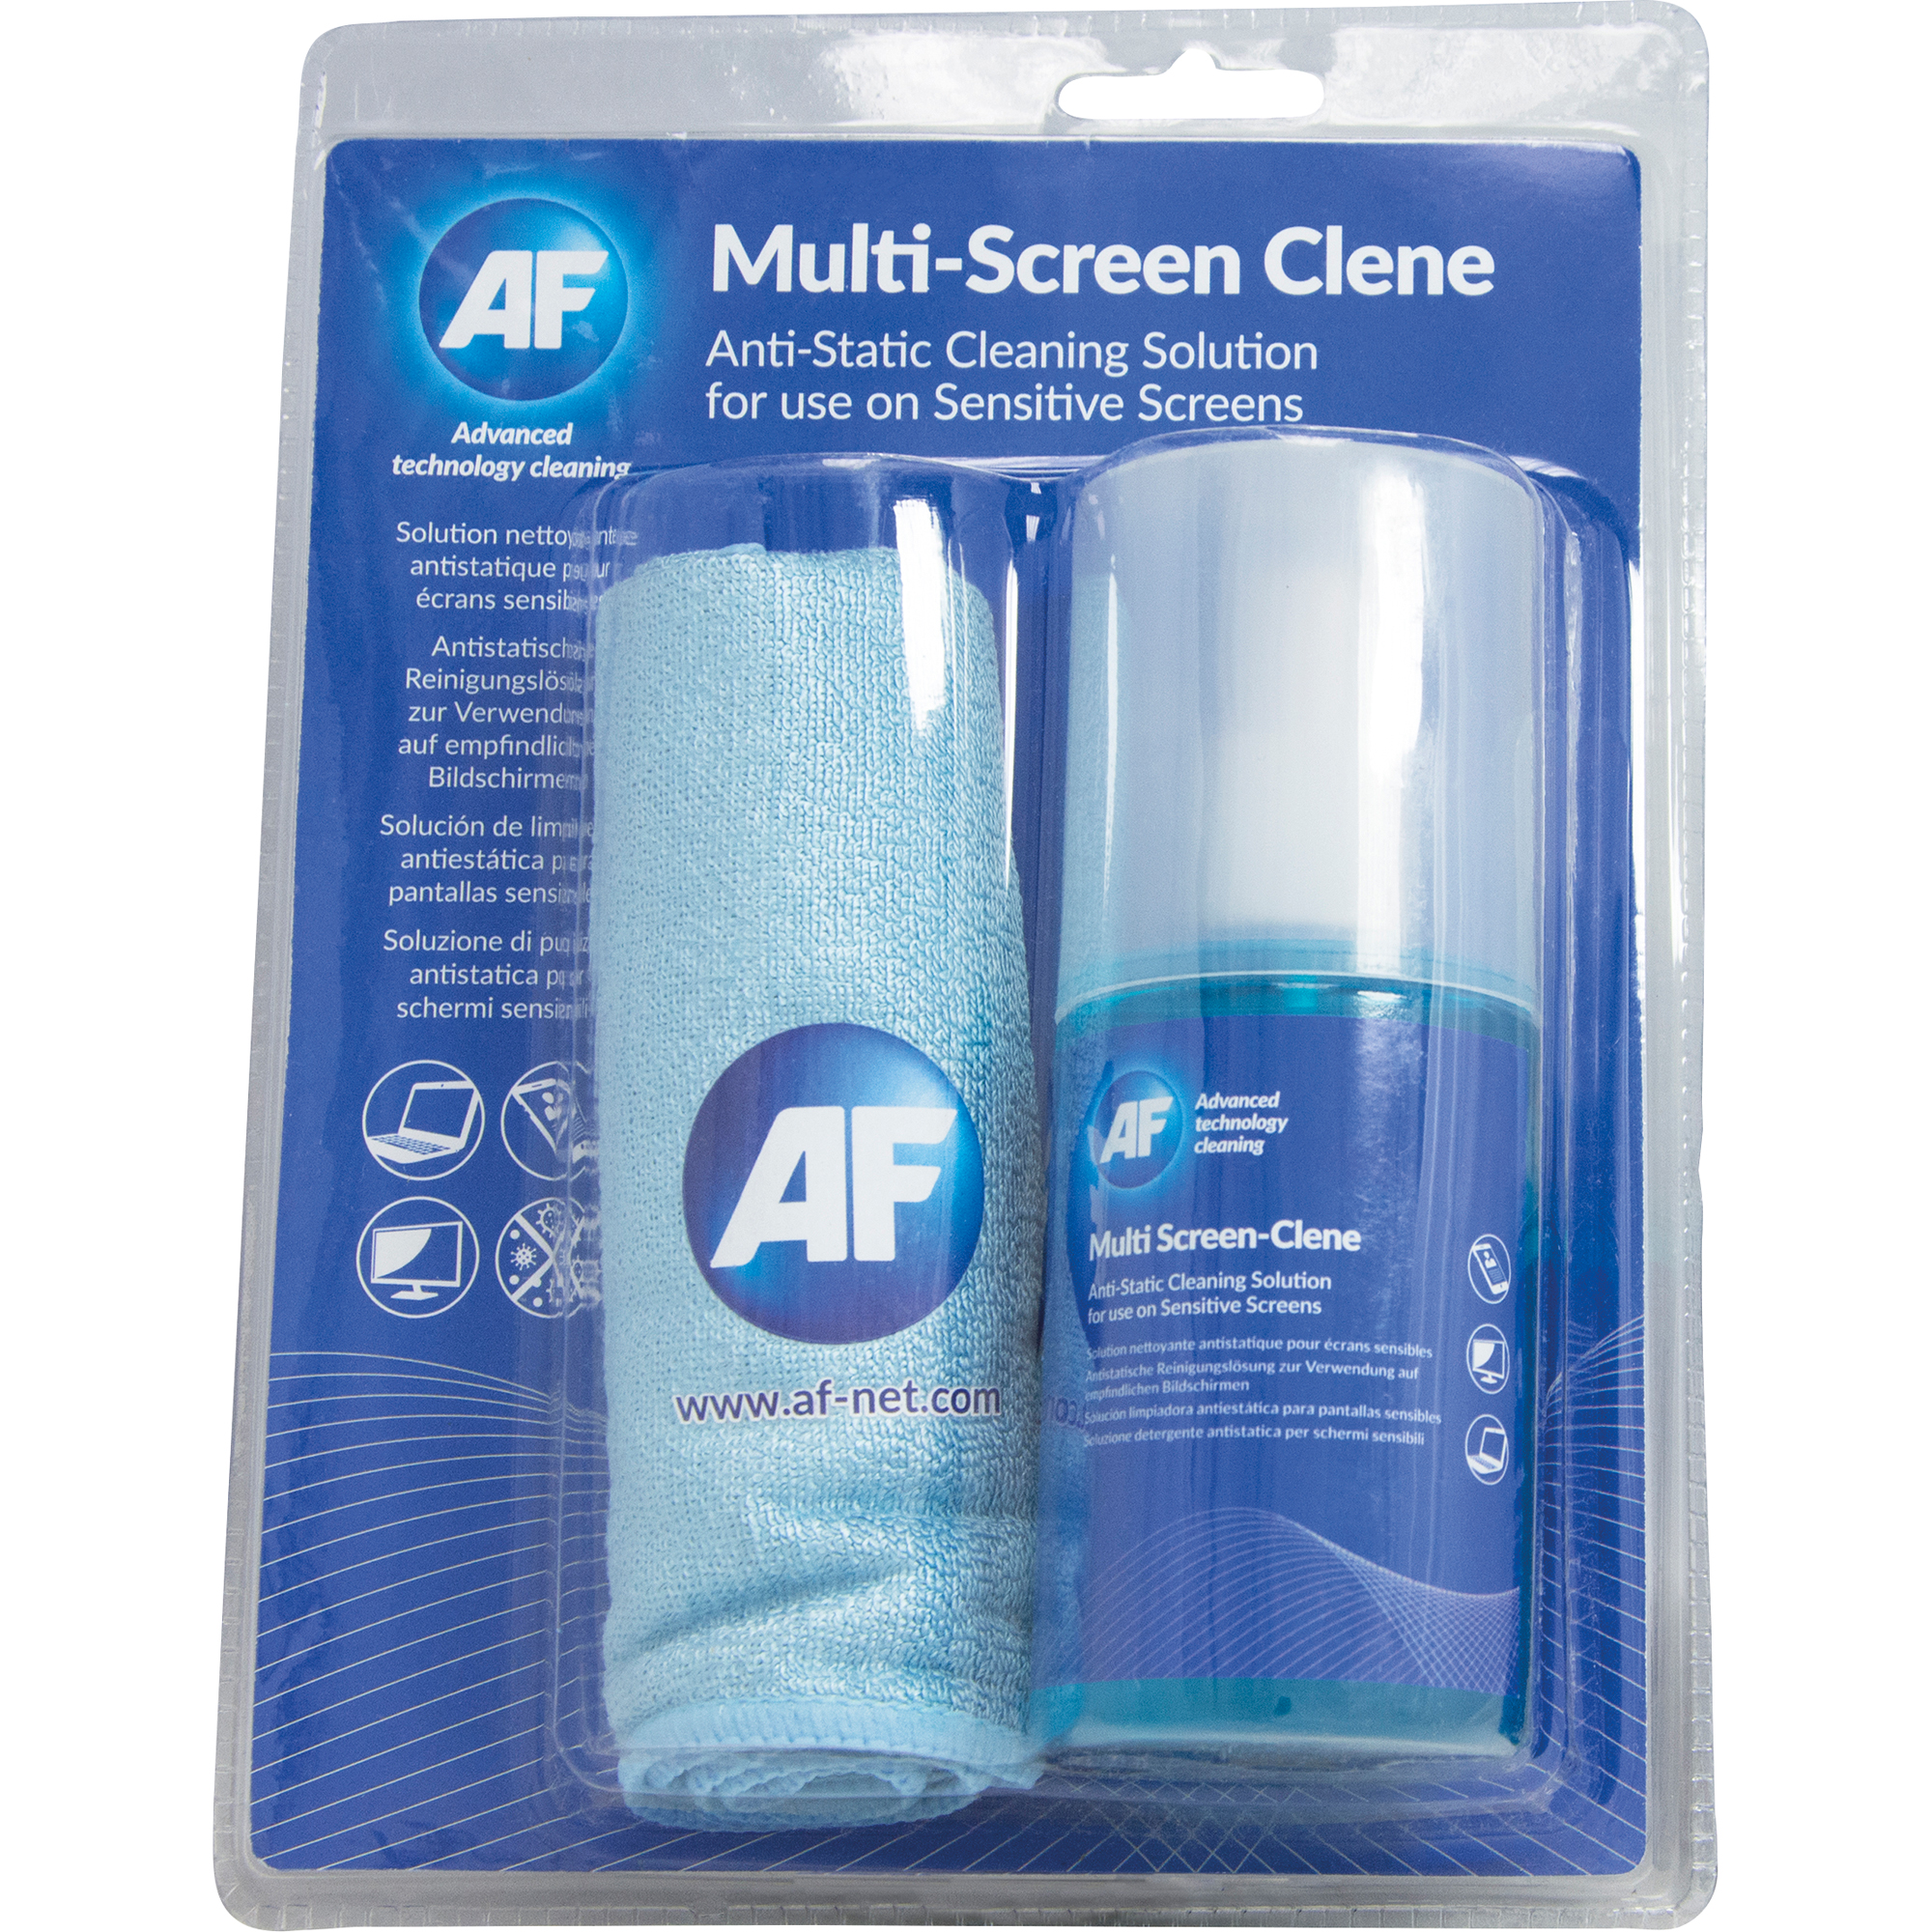 AF Reinigungsspray Multi-Screen Clene